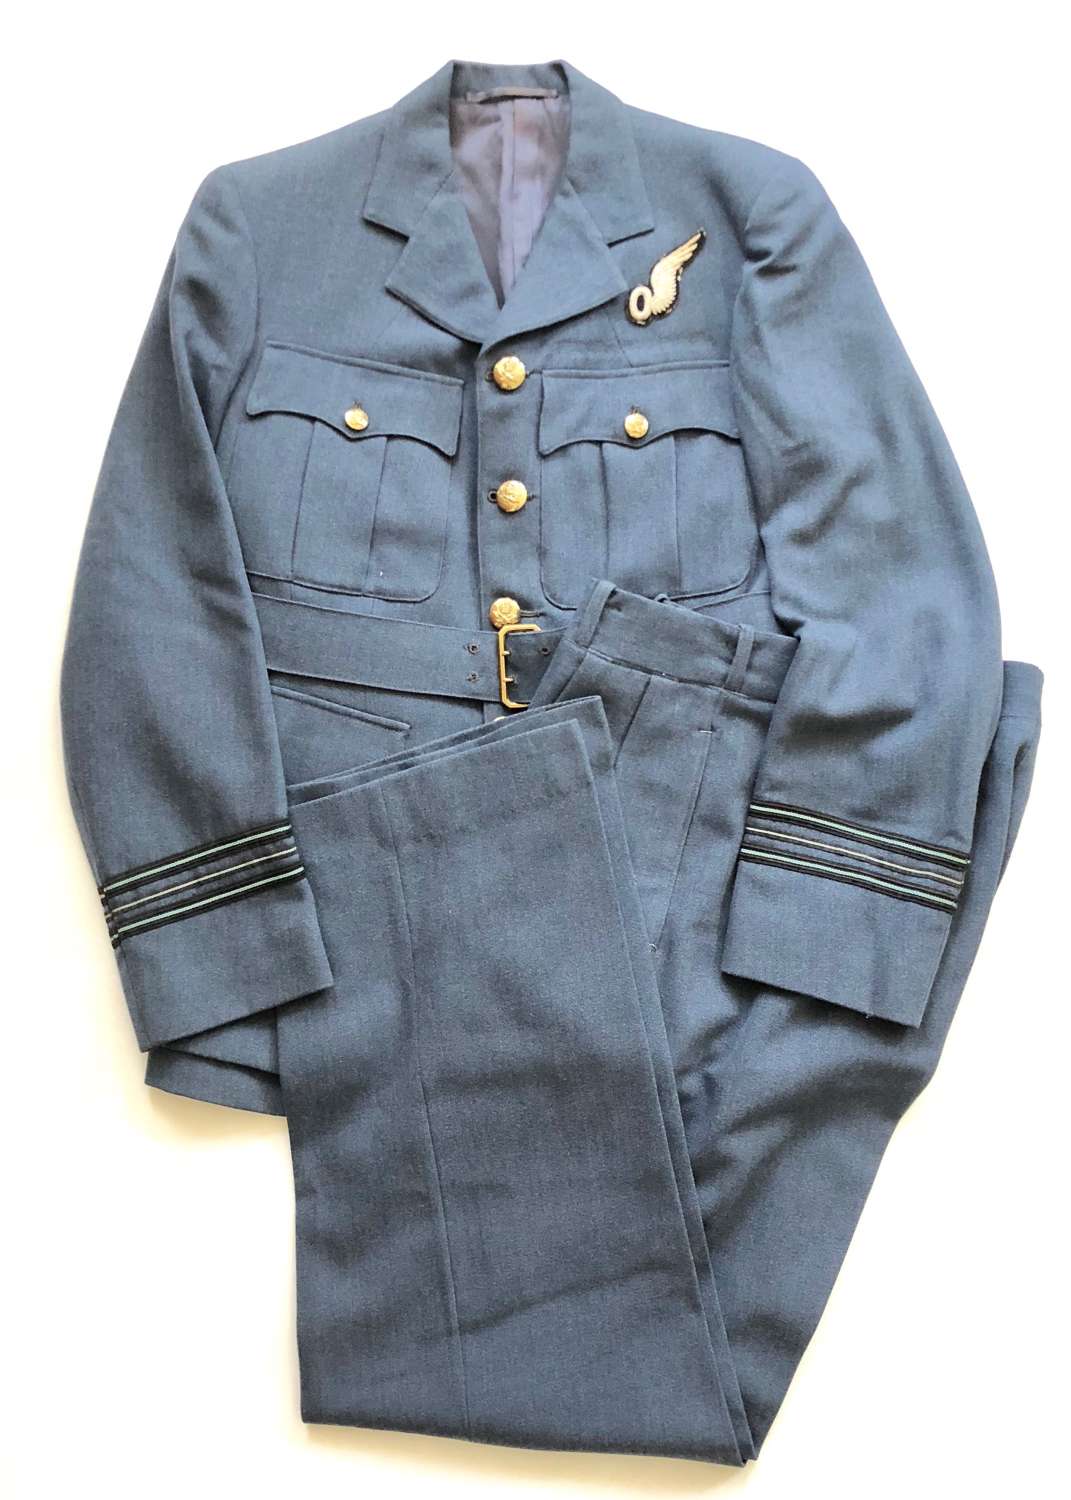 WW2 RAF Observer’s Officer’s uniform